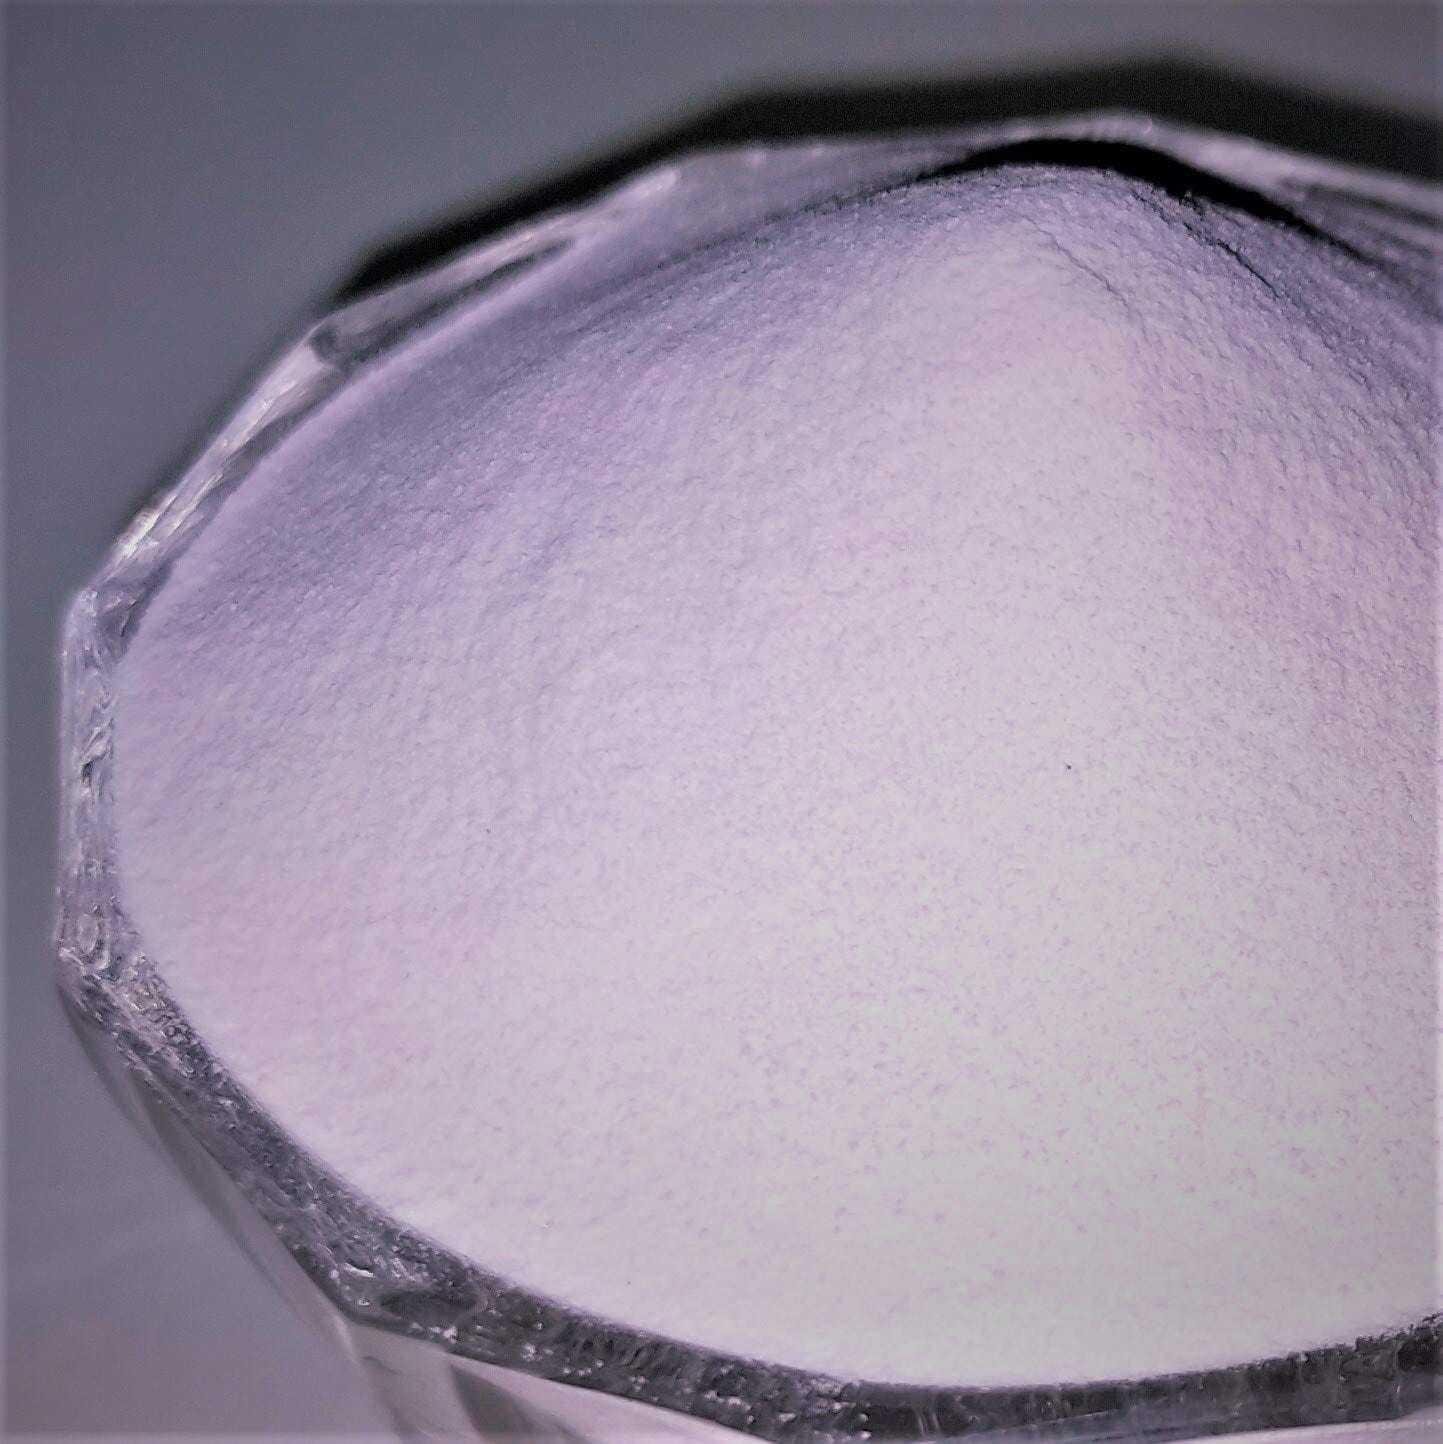 Panchsheel Manganese Sulphate Micronutrient Fertilizer Powder Growth Promoter (250 gms)